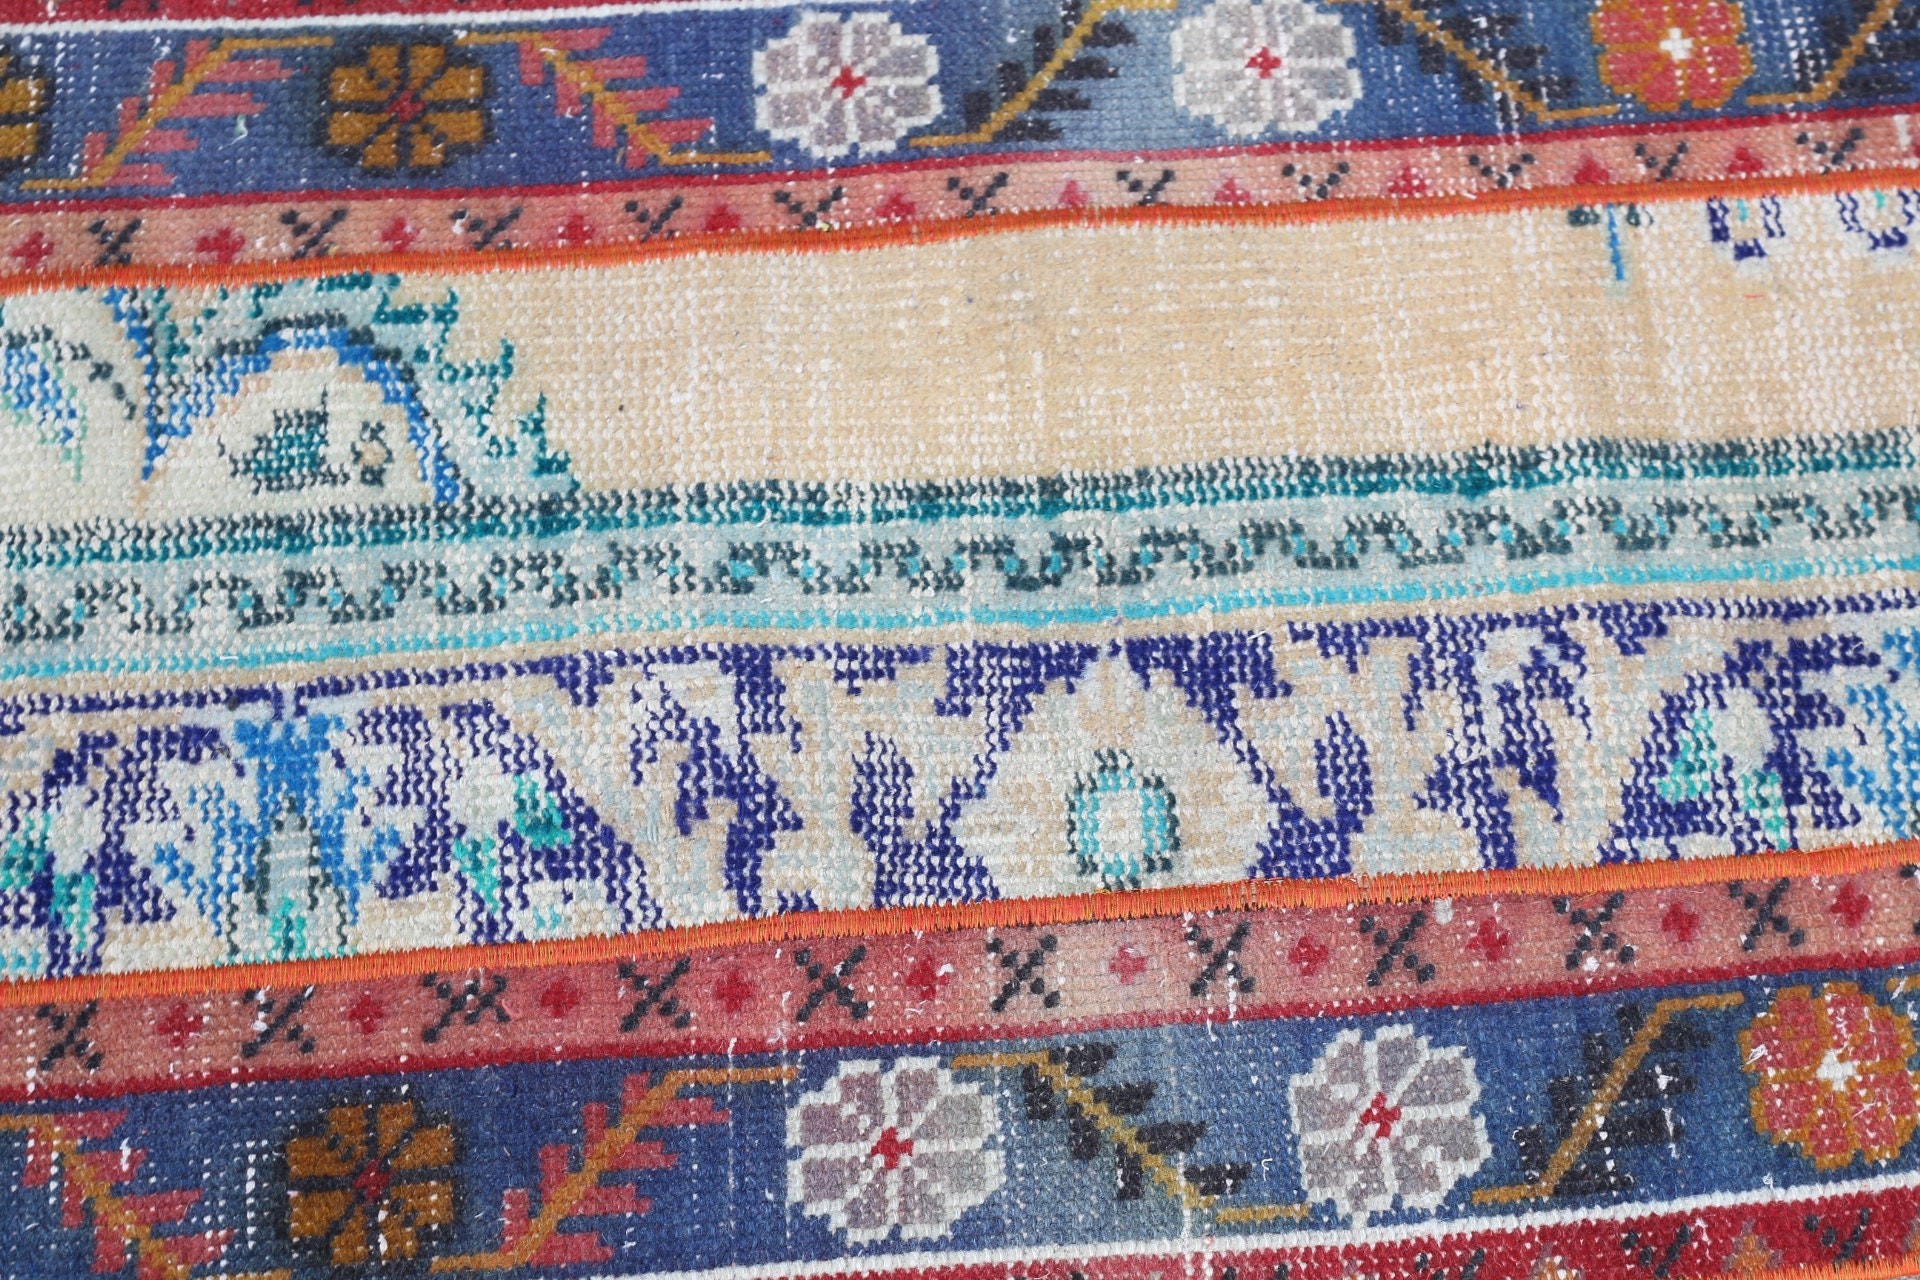 Bedroom Rugs, Wall Hanging Rugs, Blue Oriental Rugs, Aztec Rugs, Anatolian Rug, Turkish Rug, Vintage Rug, 1.8x3.1 ft Small Rug, Oushak Rug